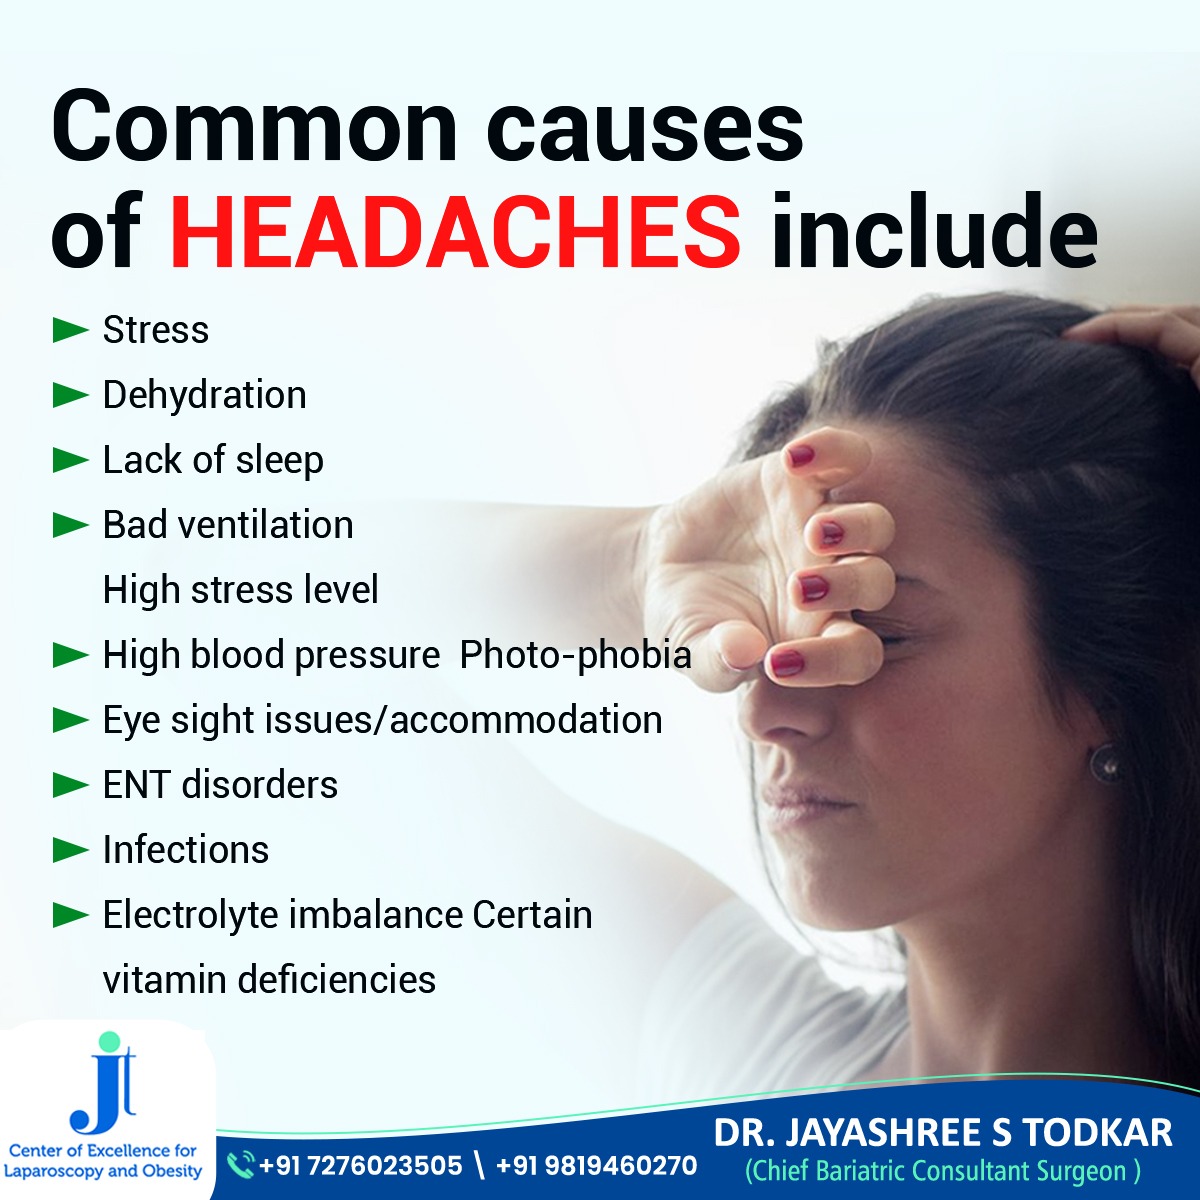 Common causes of HEADACHES include

.
.
#HeadacheCauses #Stress #Dehydration #LackOfSleep #VitaminDeficiencies #HealthTips #Wellness #HeadacheTriggers #SelfCare #JtCenterOfExcellence  #ObesityCare #DrJayashreeSTodkar